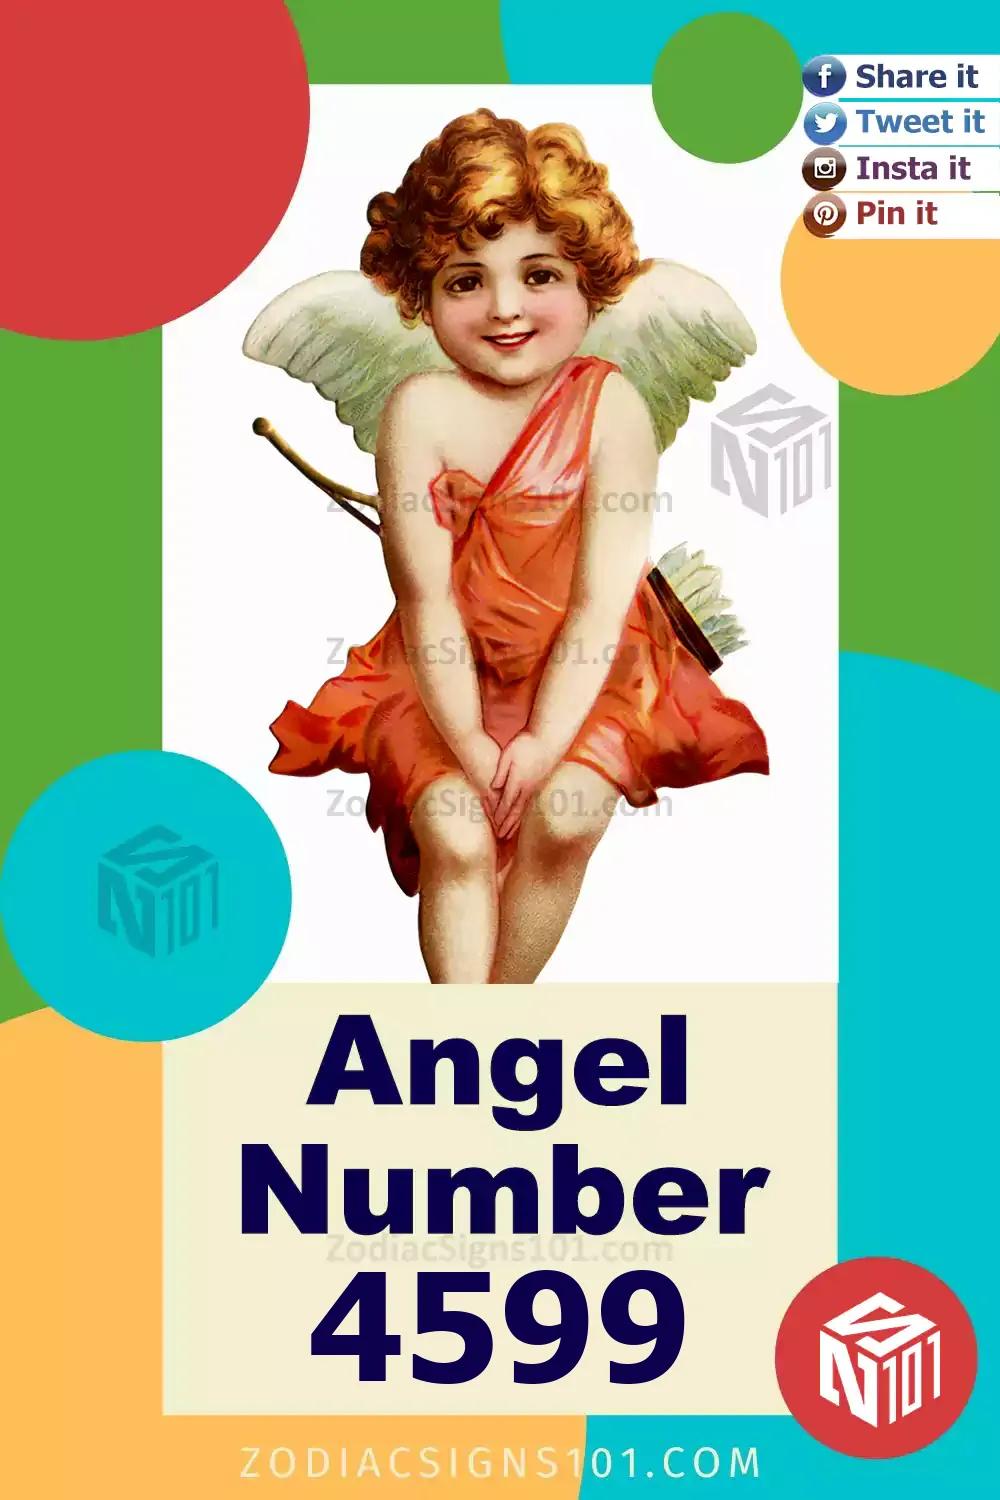 4599-Angel-Number-Meaning.jpg